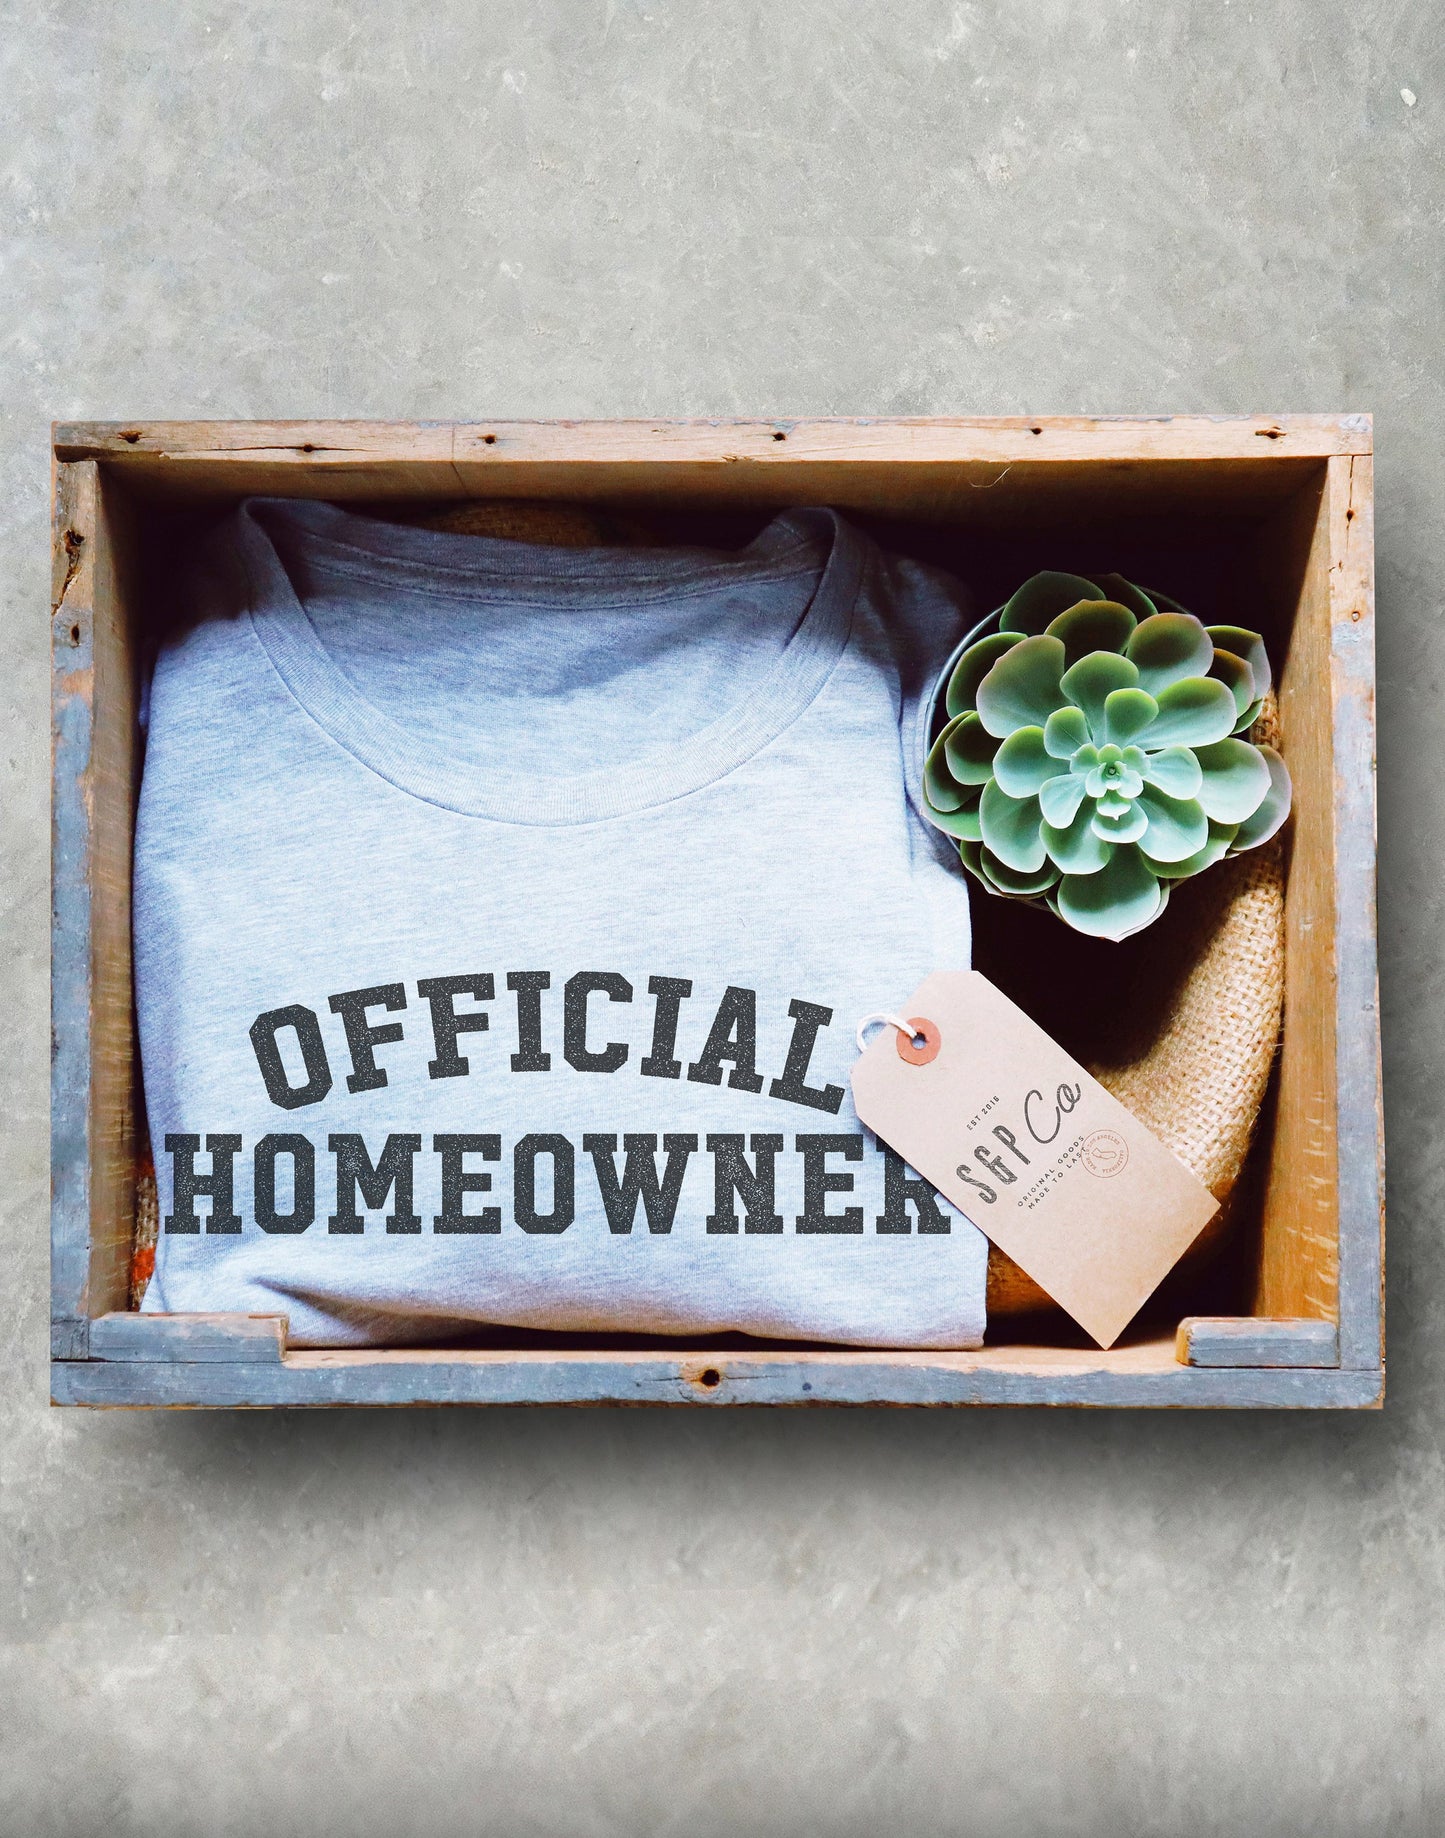 Official Homeowner Unisex Shirt - New Homeowner Gift, Housewarming Gift, Newlywed Shirt, Wedding Gift, New Home Shirt, Real Estate Agent Tee